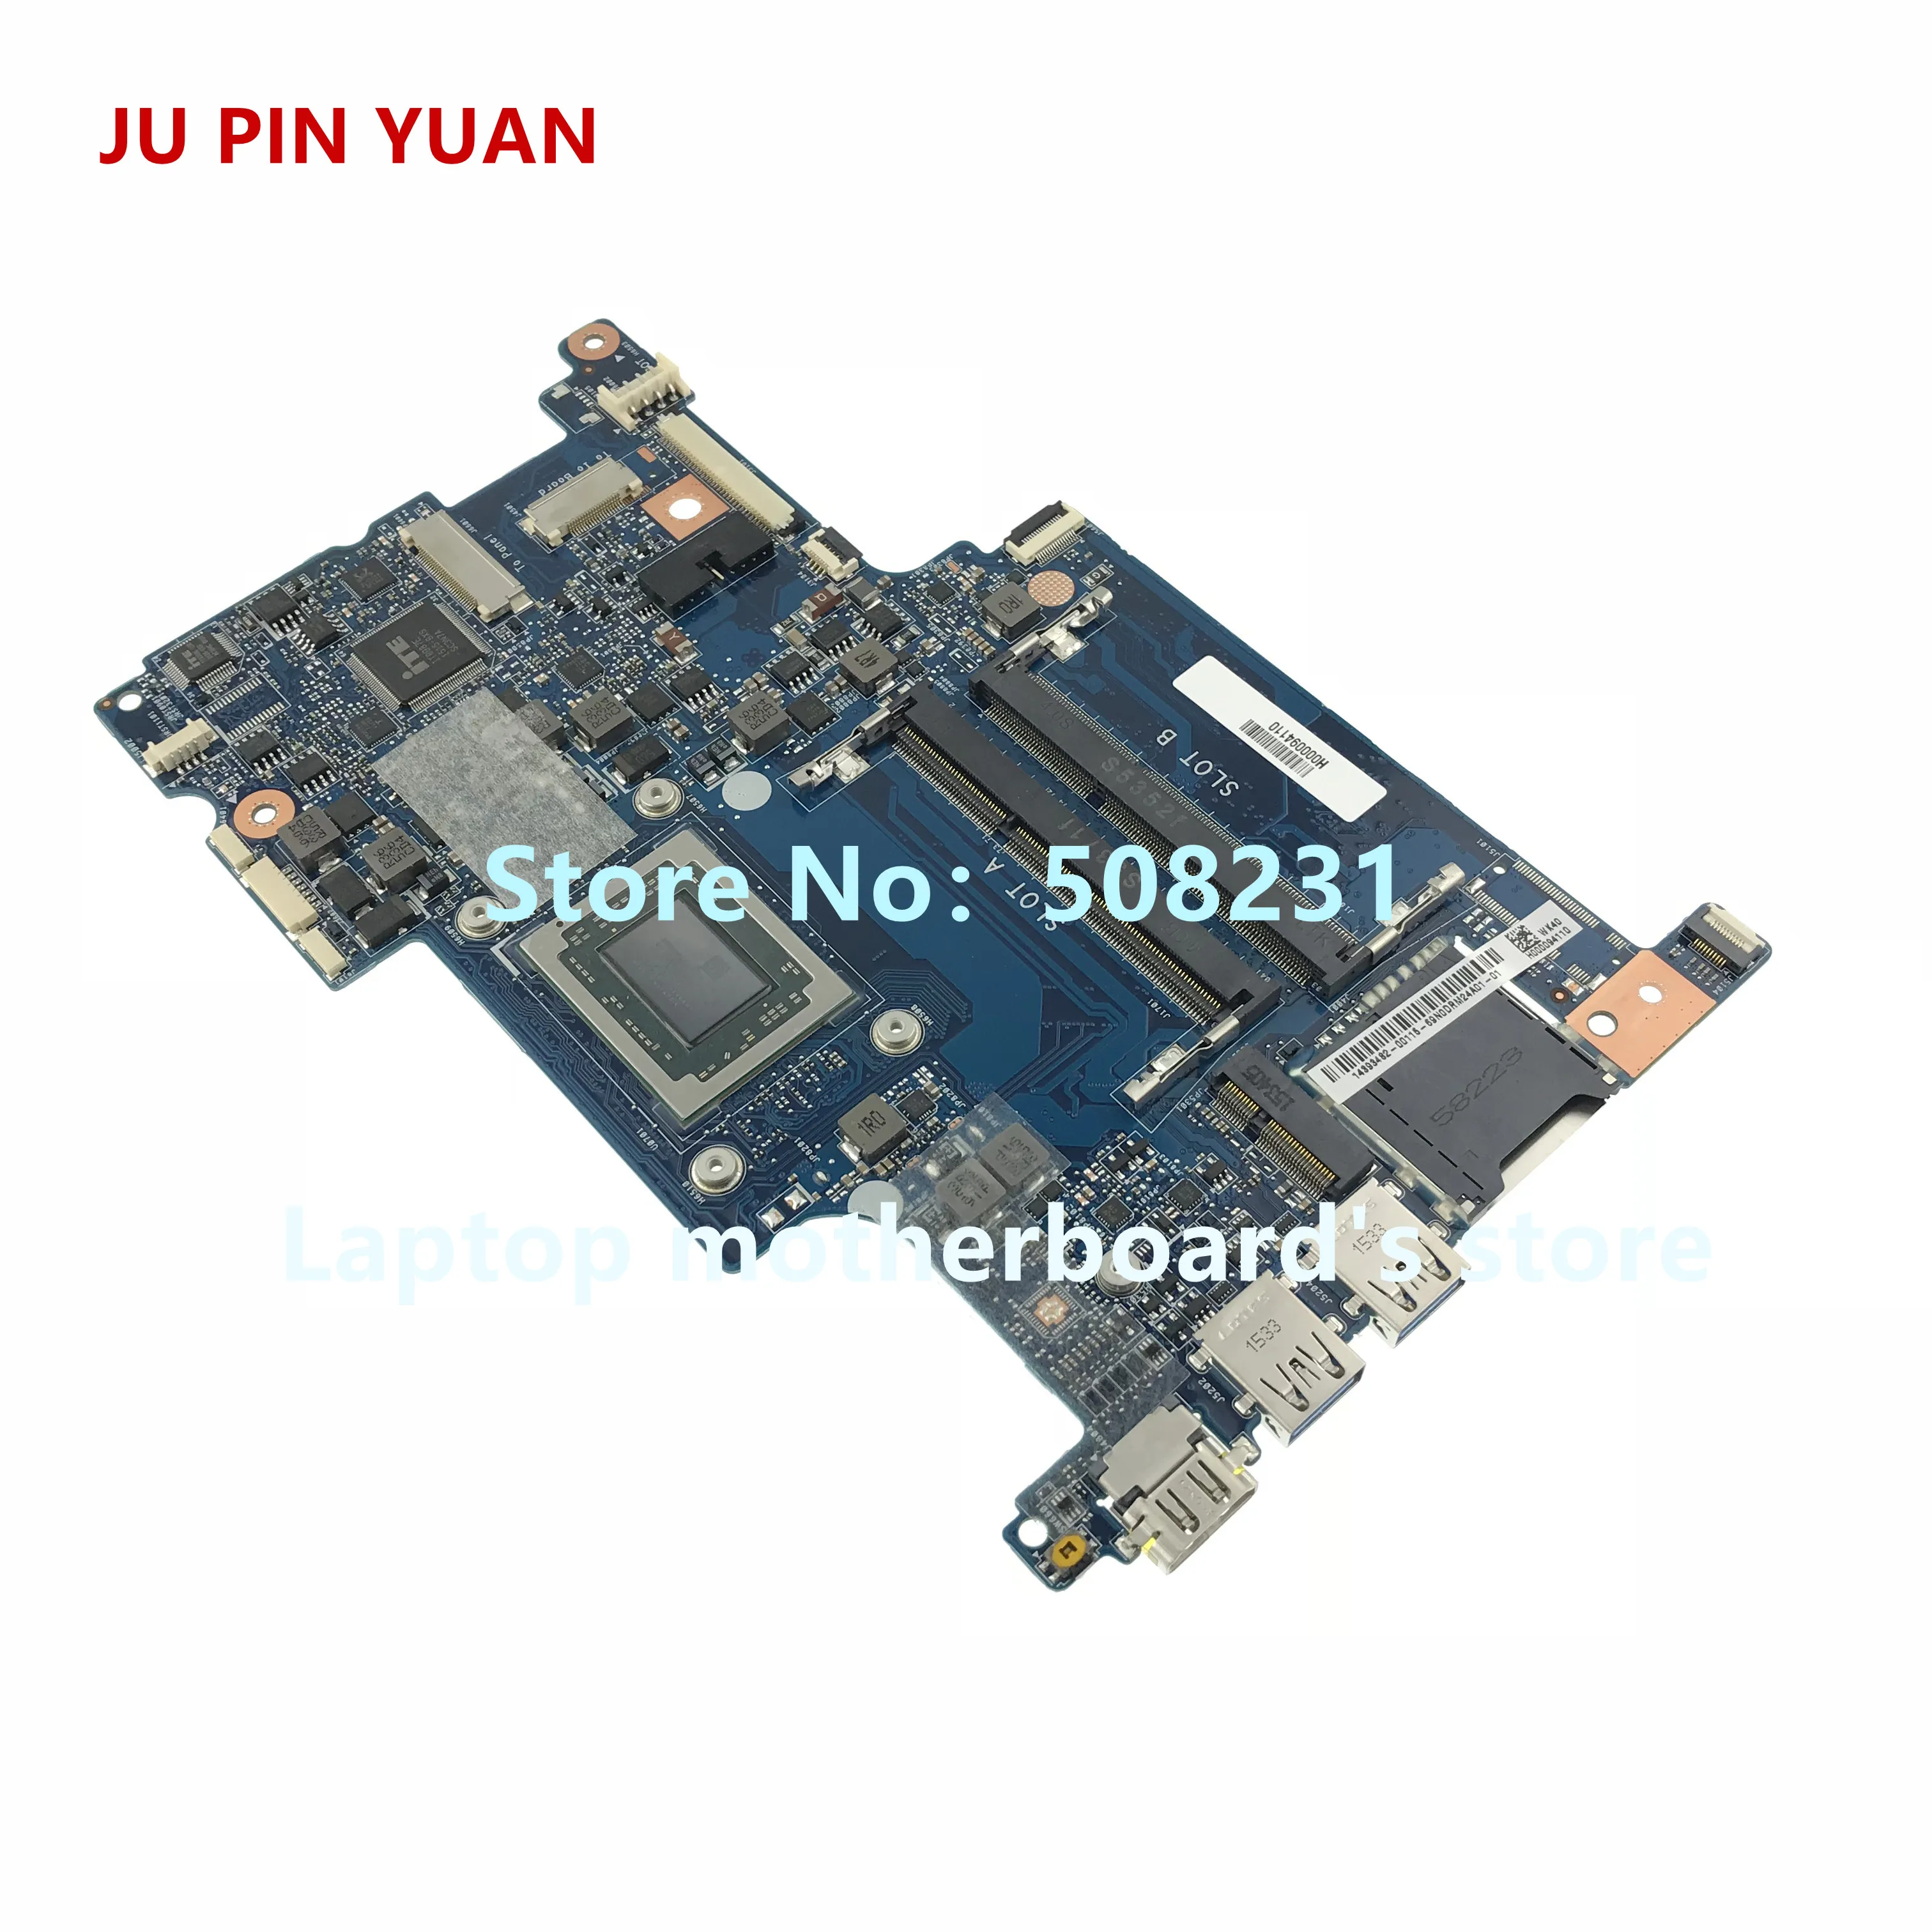 JU PIN юаней H000094110 для Toshiba Satellite L45DW E45D L55w материнская плата для ноутбука с Fx-8800p Процессор все функции полностью протестированы